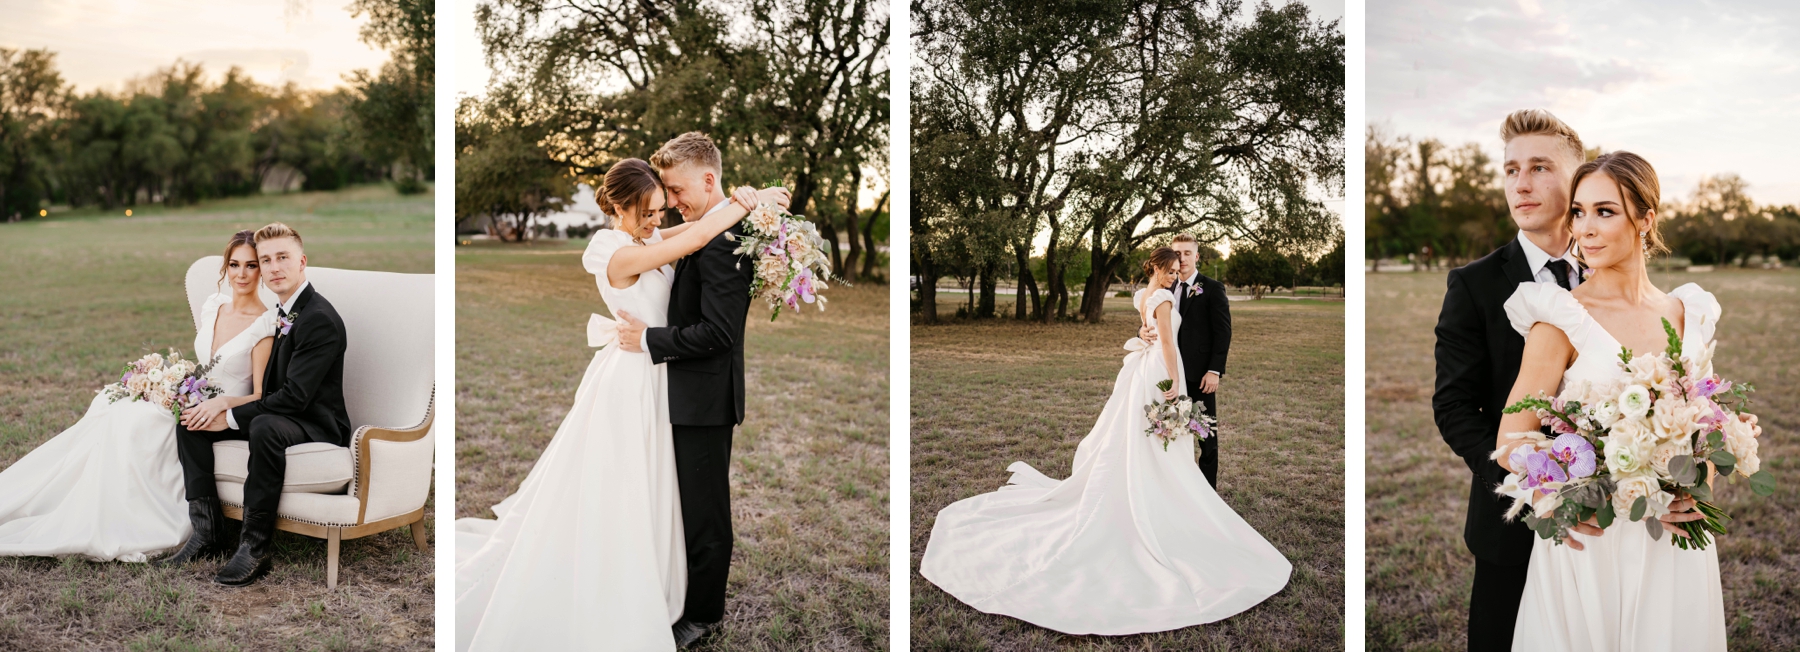 Romantic Wedding in Gruene | High Pines Media | Central Texas Wedding Photographer | romantic wedding, wedding inspiration, Hill Country Wedding Venue | via highpinesmedia.com